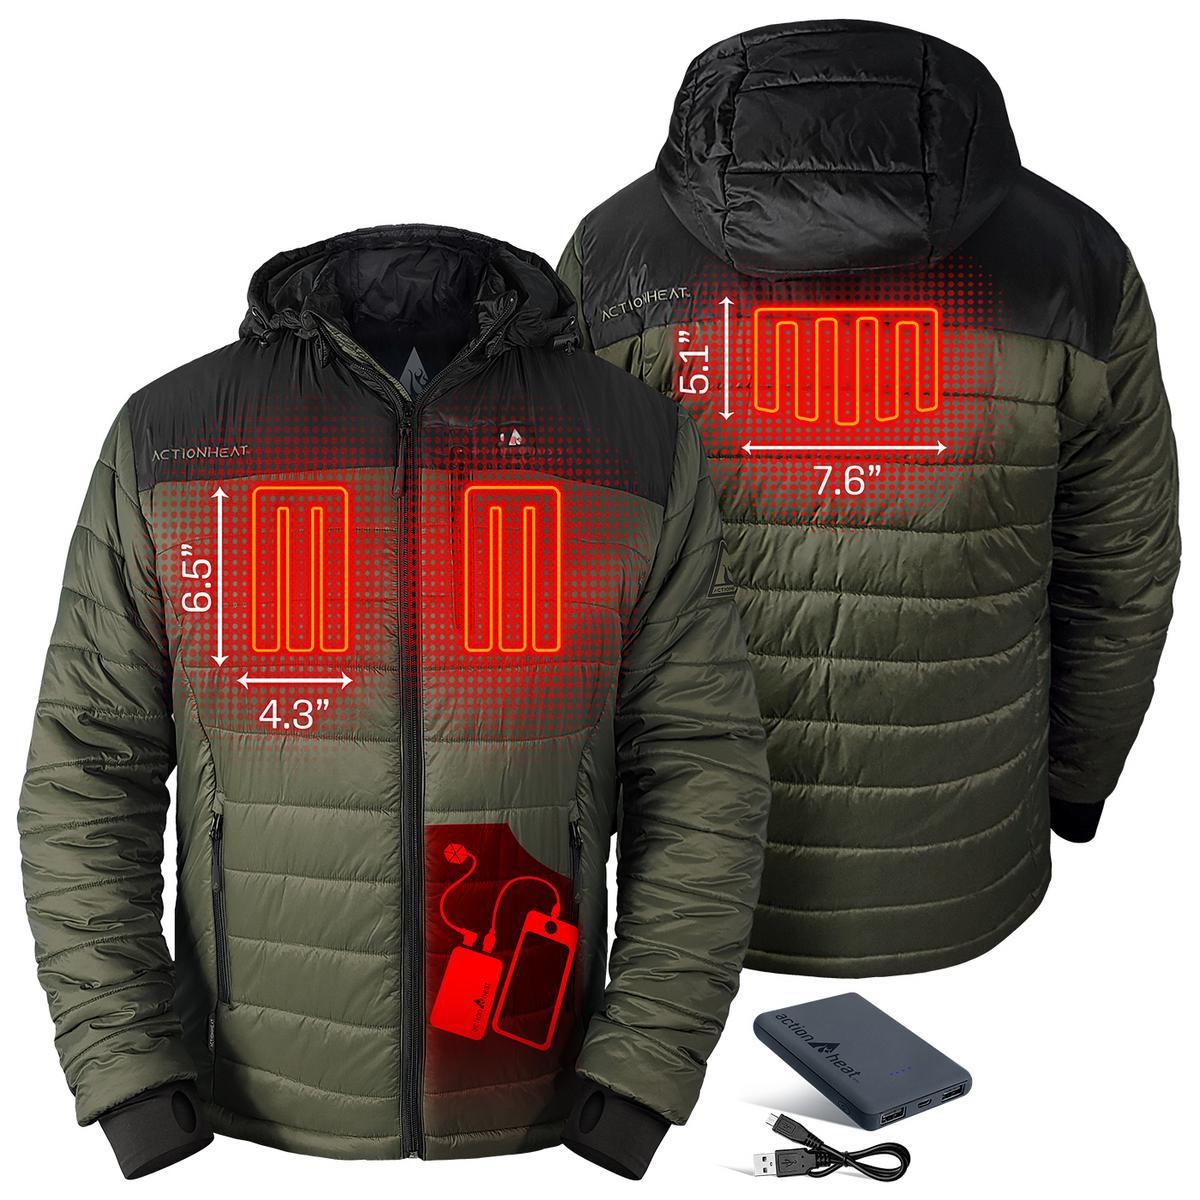 ActionHeat 5V Men's Pocono Insulated Heated Jacket - Back